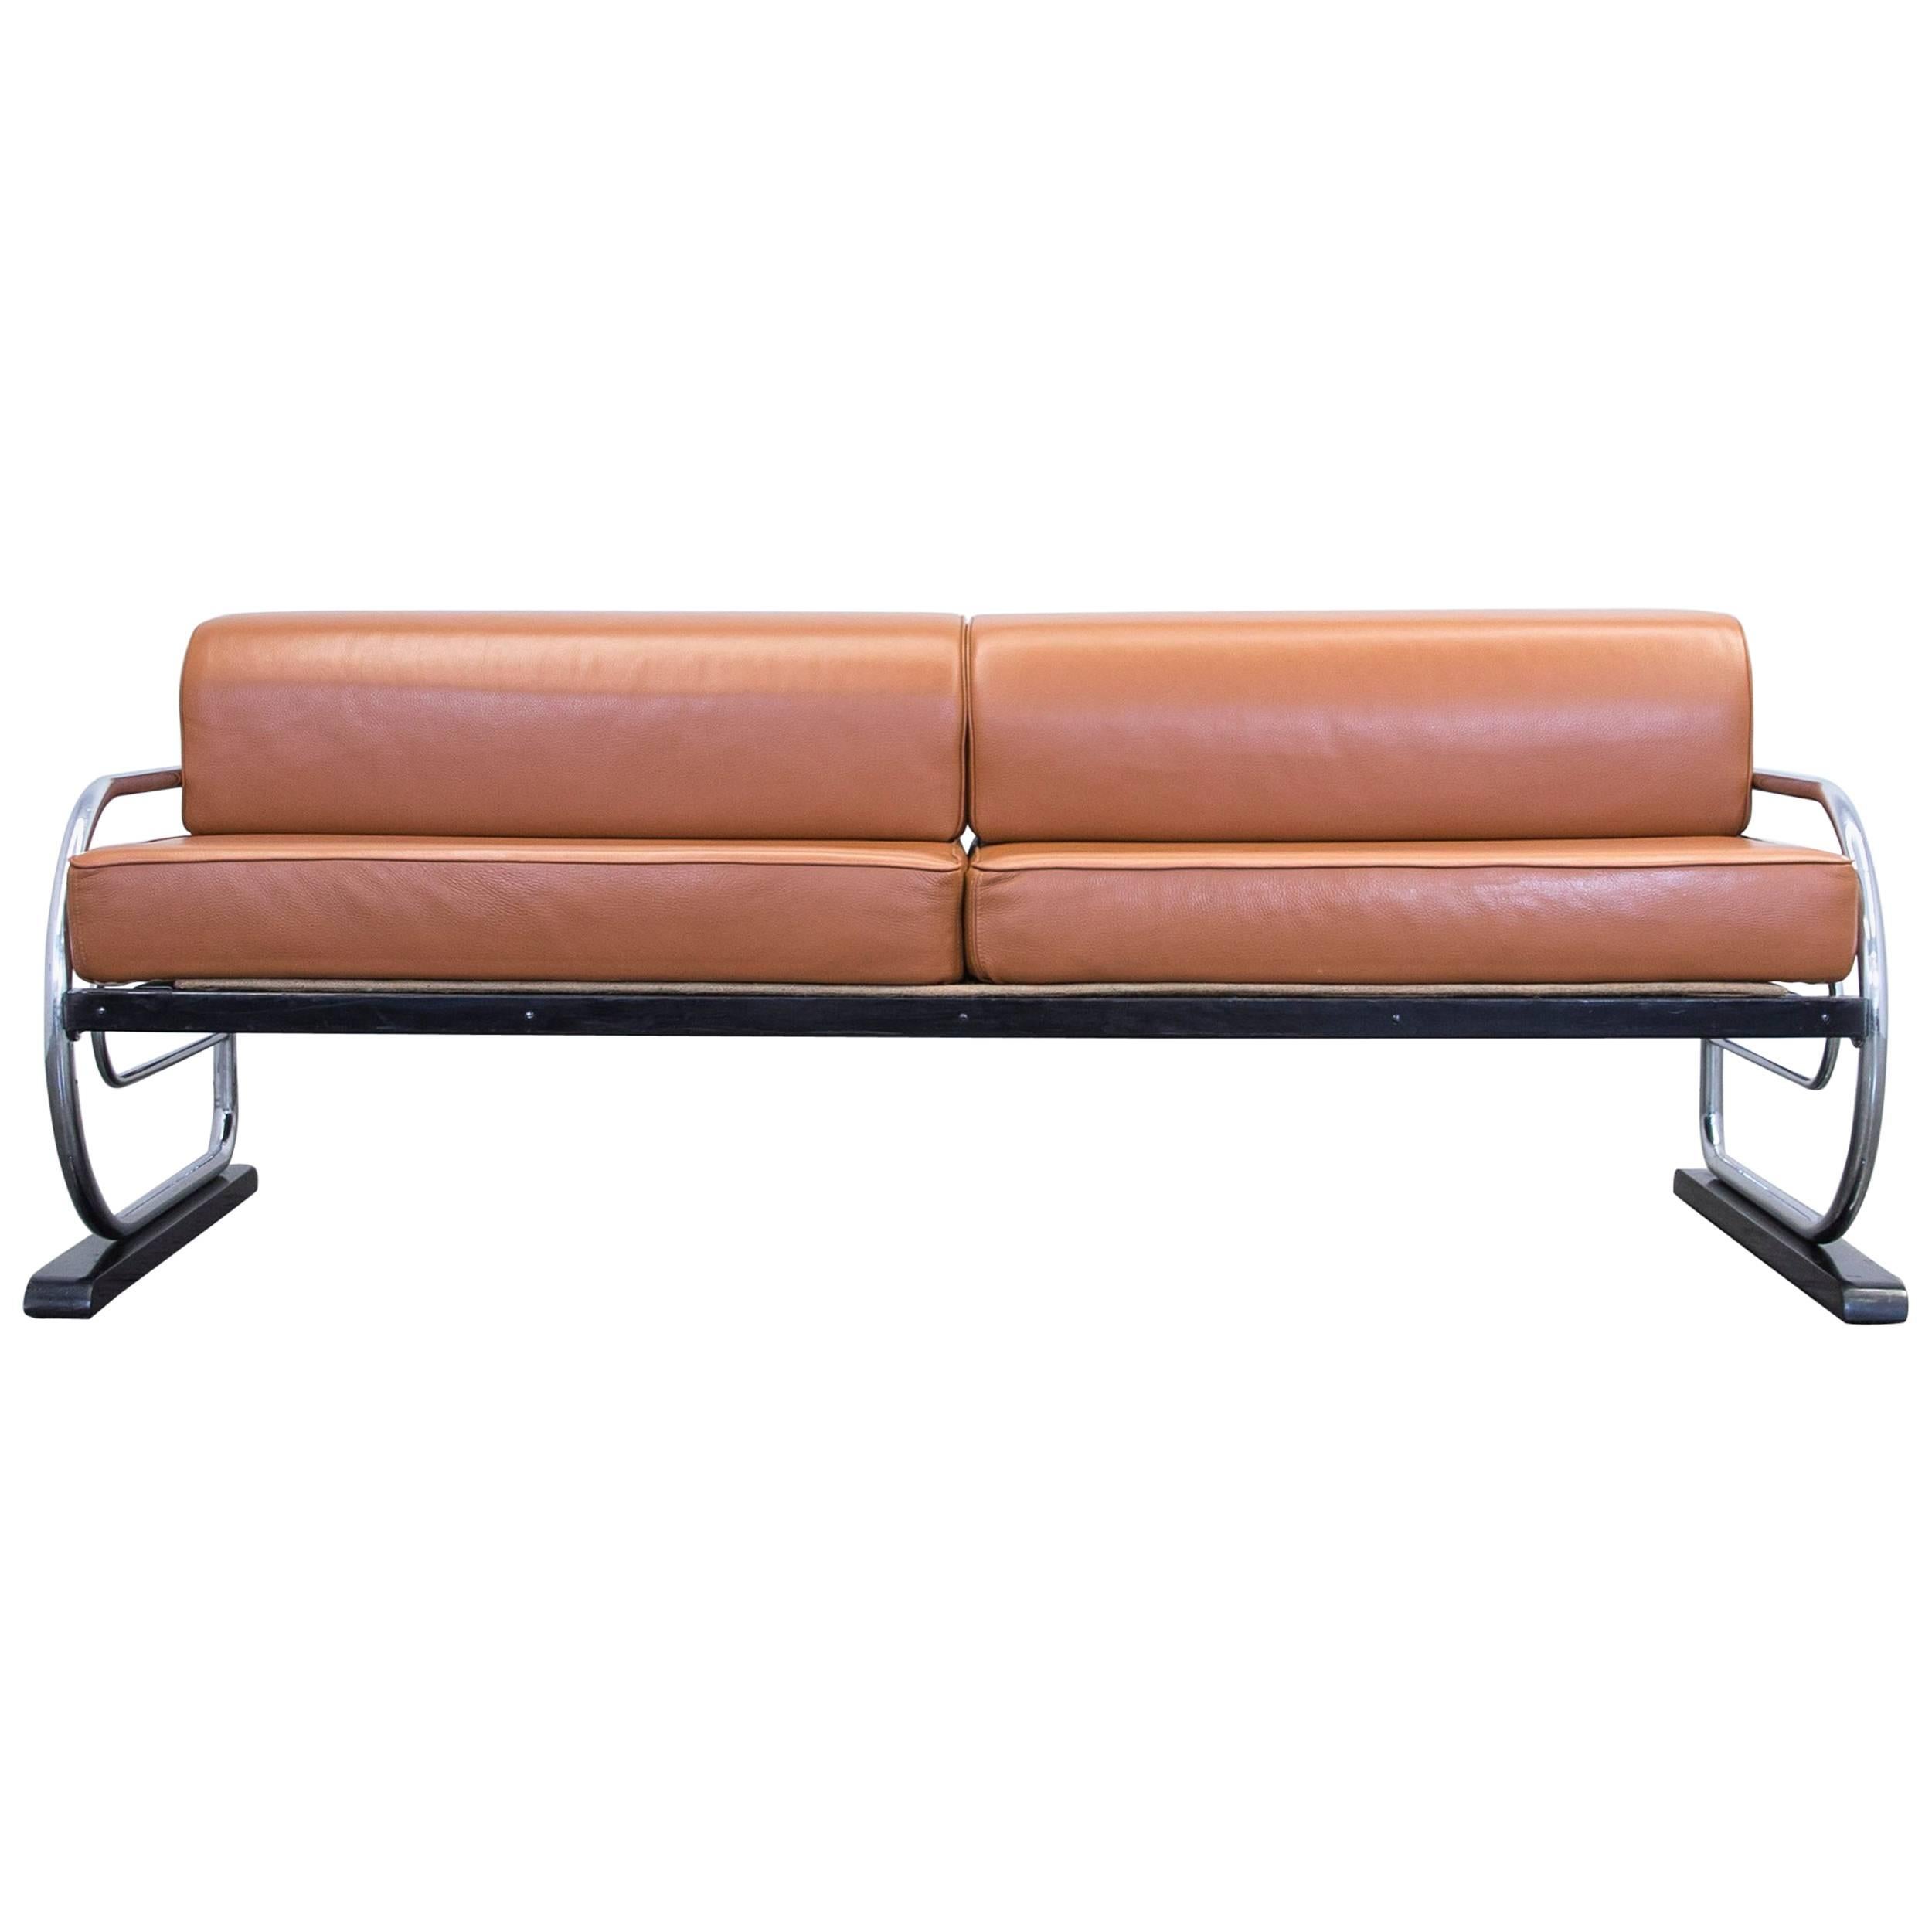 Gottwald Bauhaus Designer Sofa Leather Cognac Brown Three-Seat Metal Couch